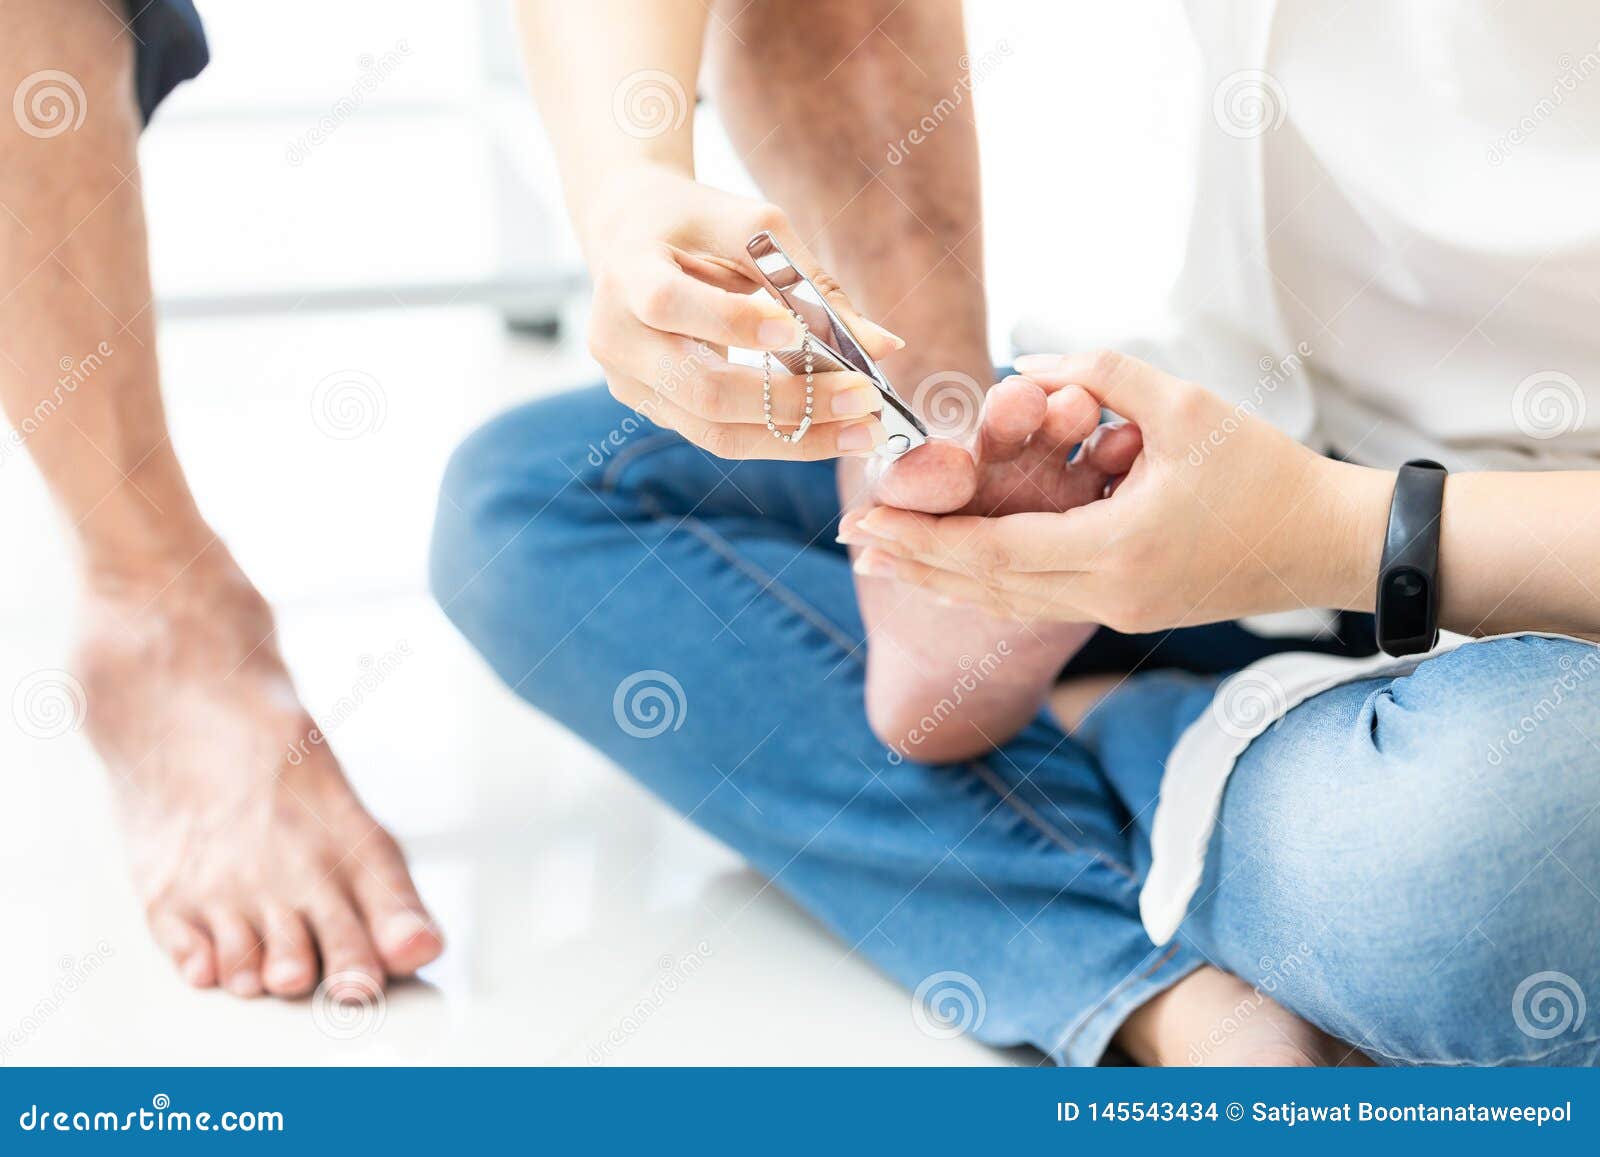 the daughterÃ¢â¬â¢s hand holds a nail clipper,cutting the toenails for her mother,asian young woman help to cut the toenails for the